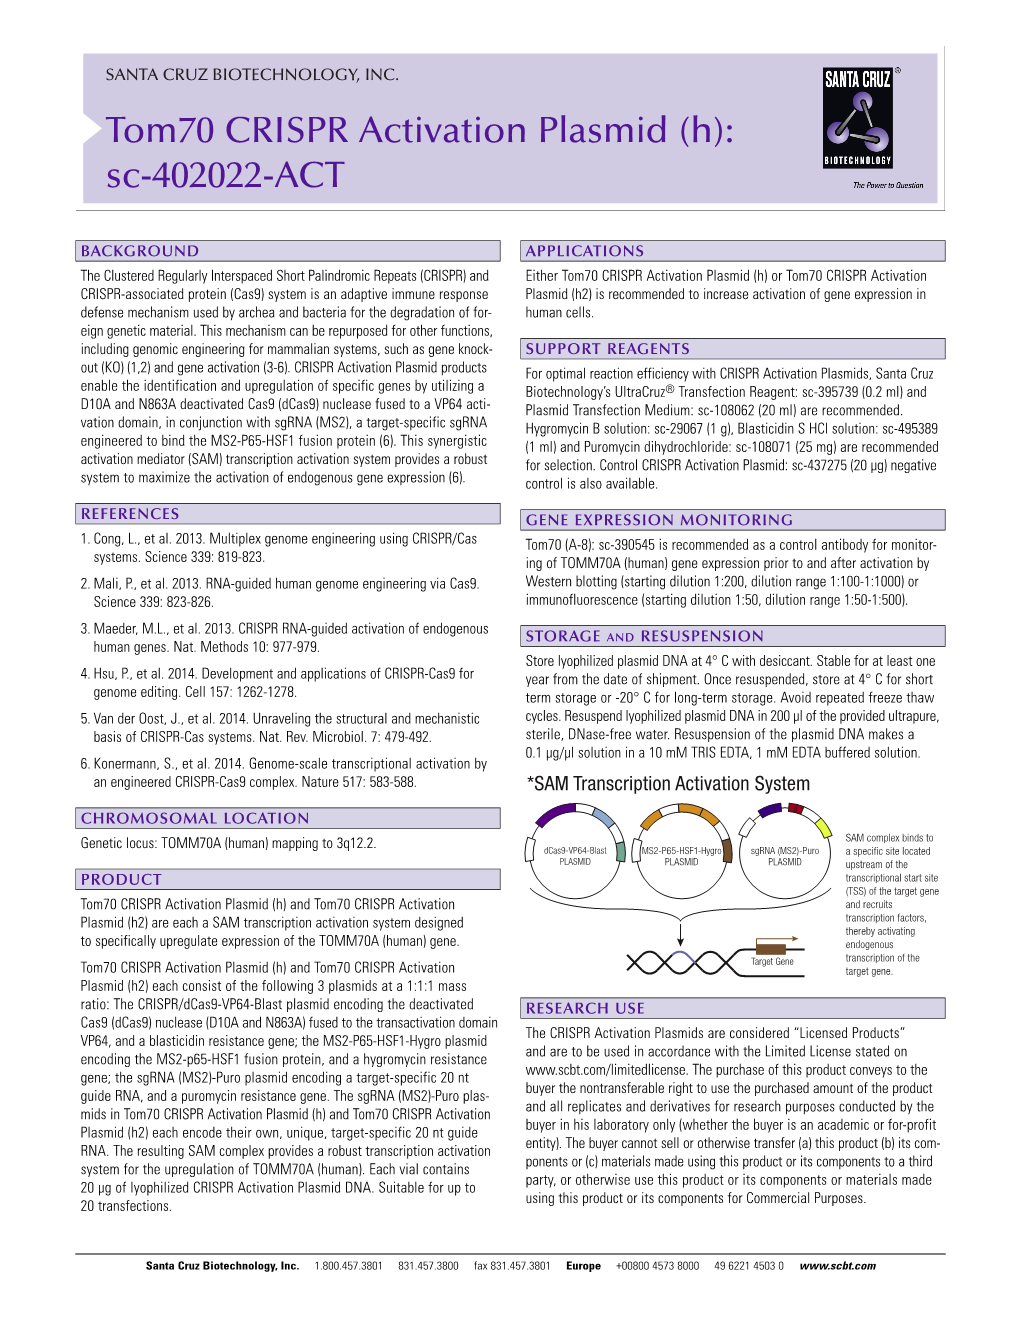 Tom70 CRISPR Activation Plasmid (H): Sc-402022-ACT